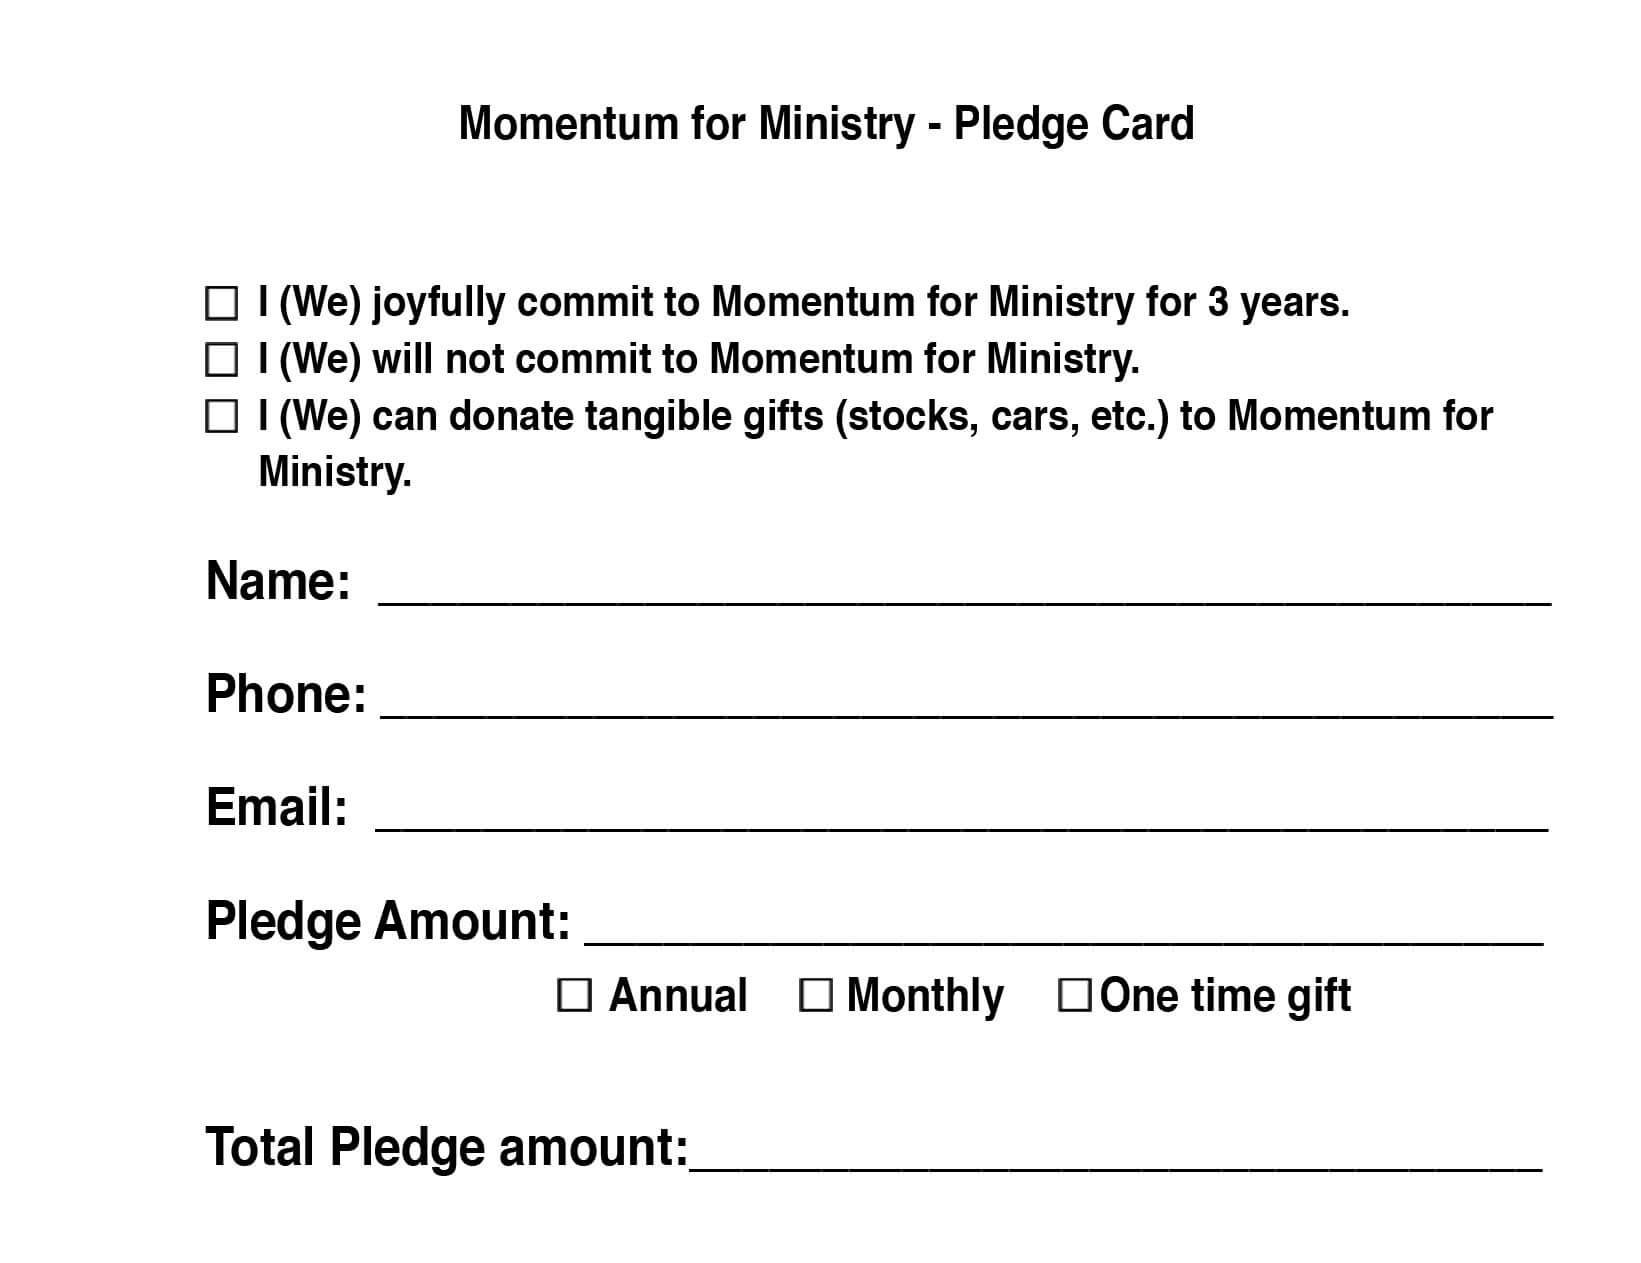 Wedding Donation Cards Templates. Non. Free Pledge Card For Free Pledge Card Template